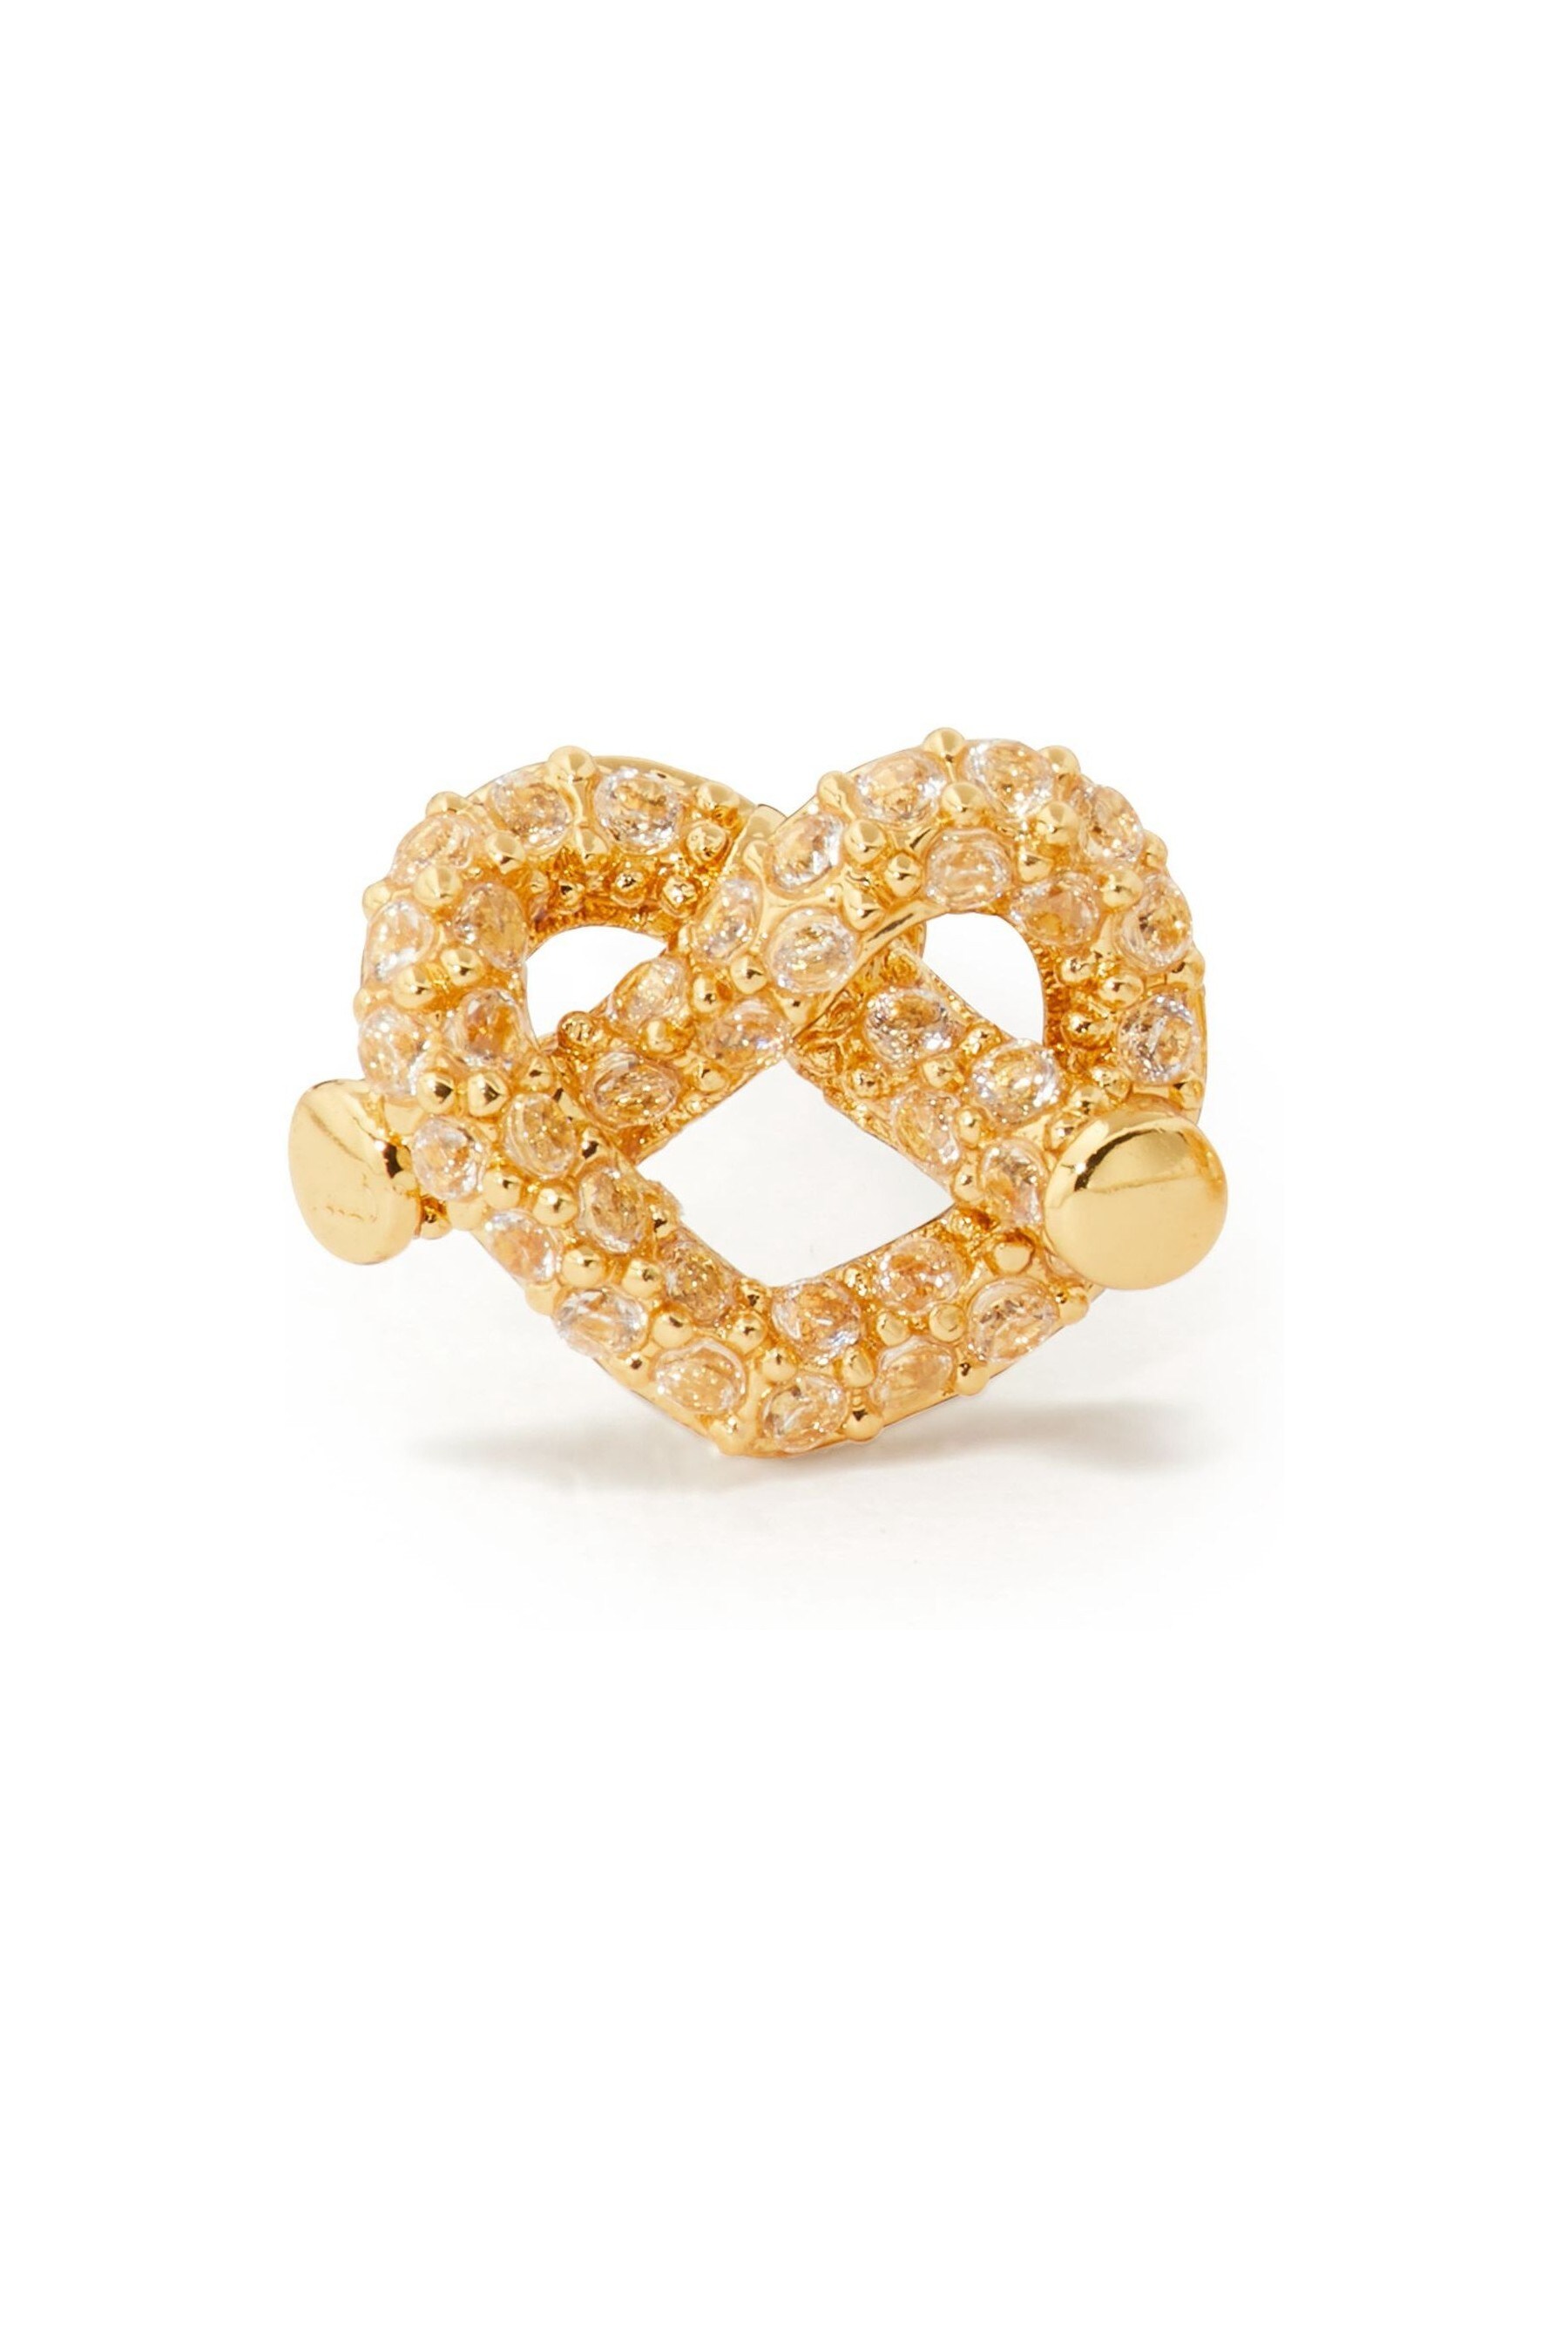 Buy 14k Yellow Gold Diamond Cut Love Knot Stud Earrings Online in India   Etsy